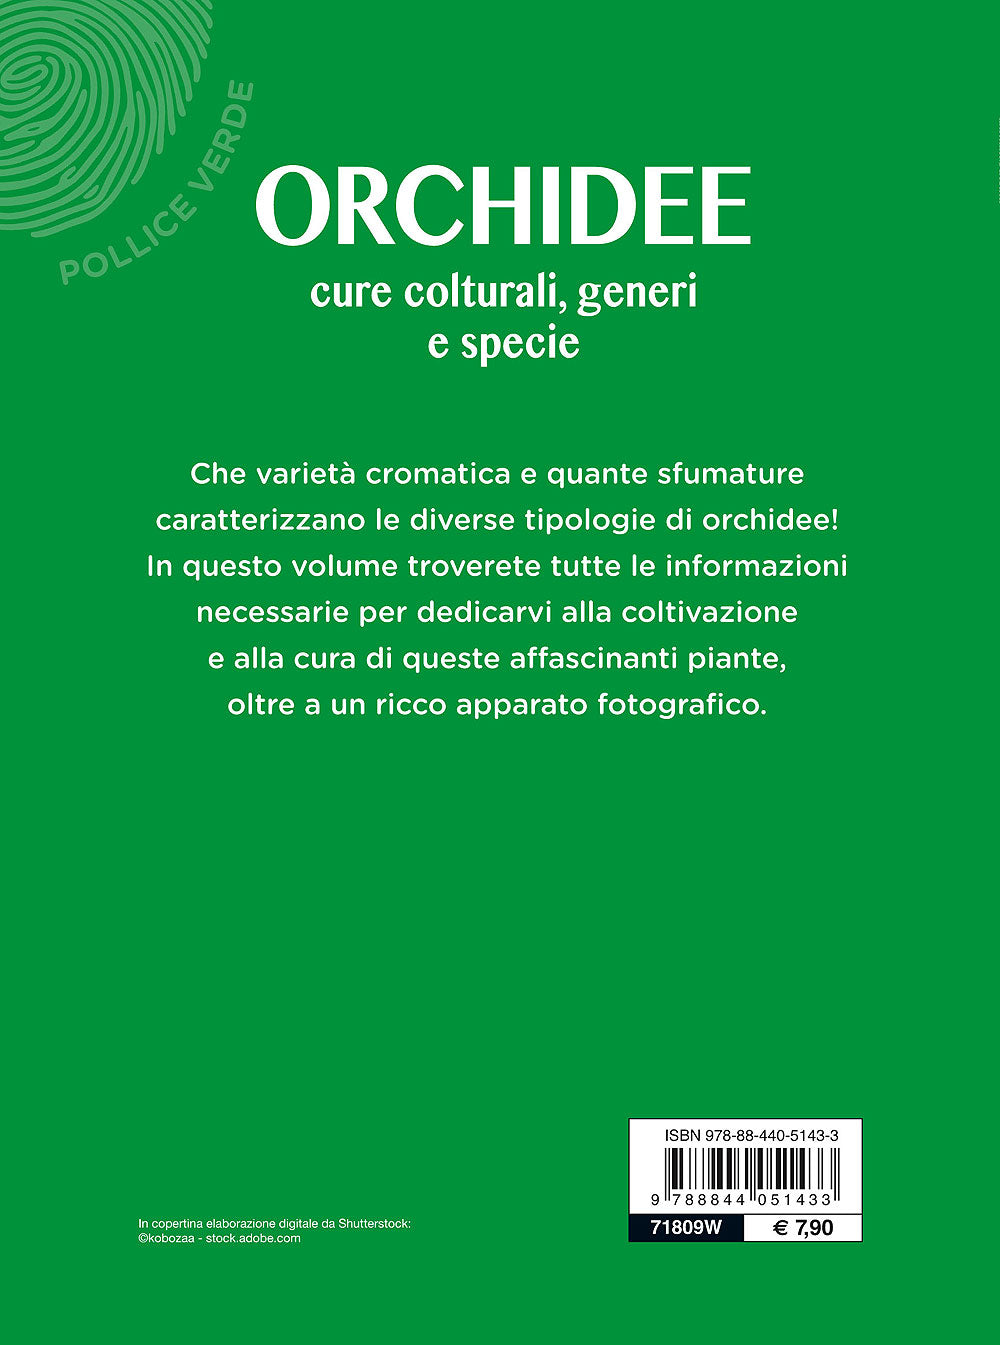 Orchidee::Cure colturali, generi e specie